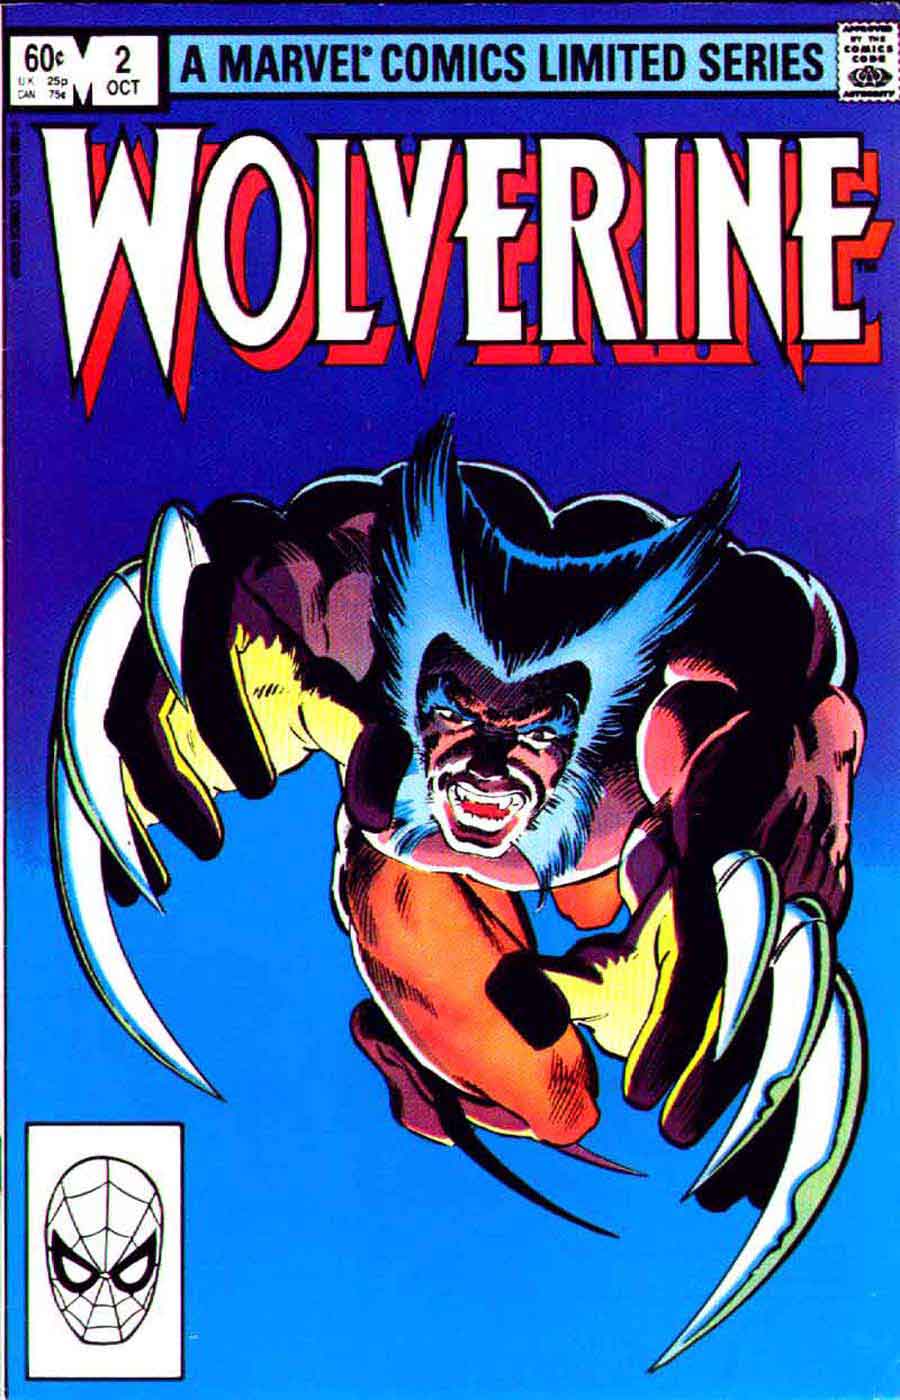 Wolverine v1 #2 1980s marvel comic book cover art by Frank Miller